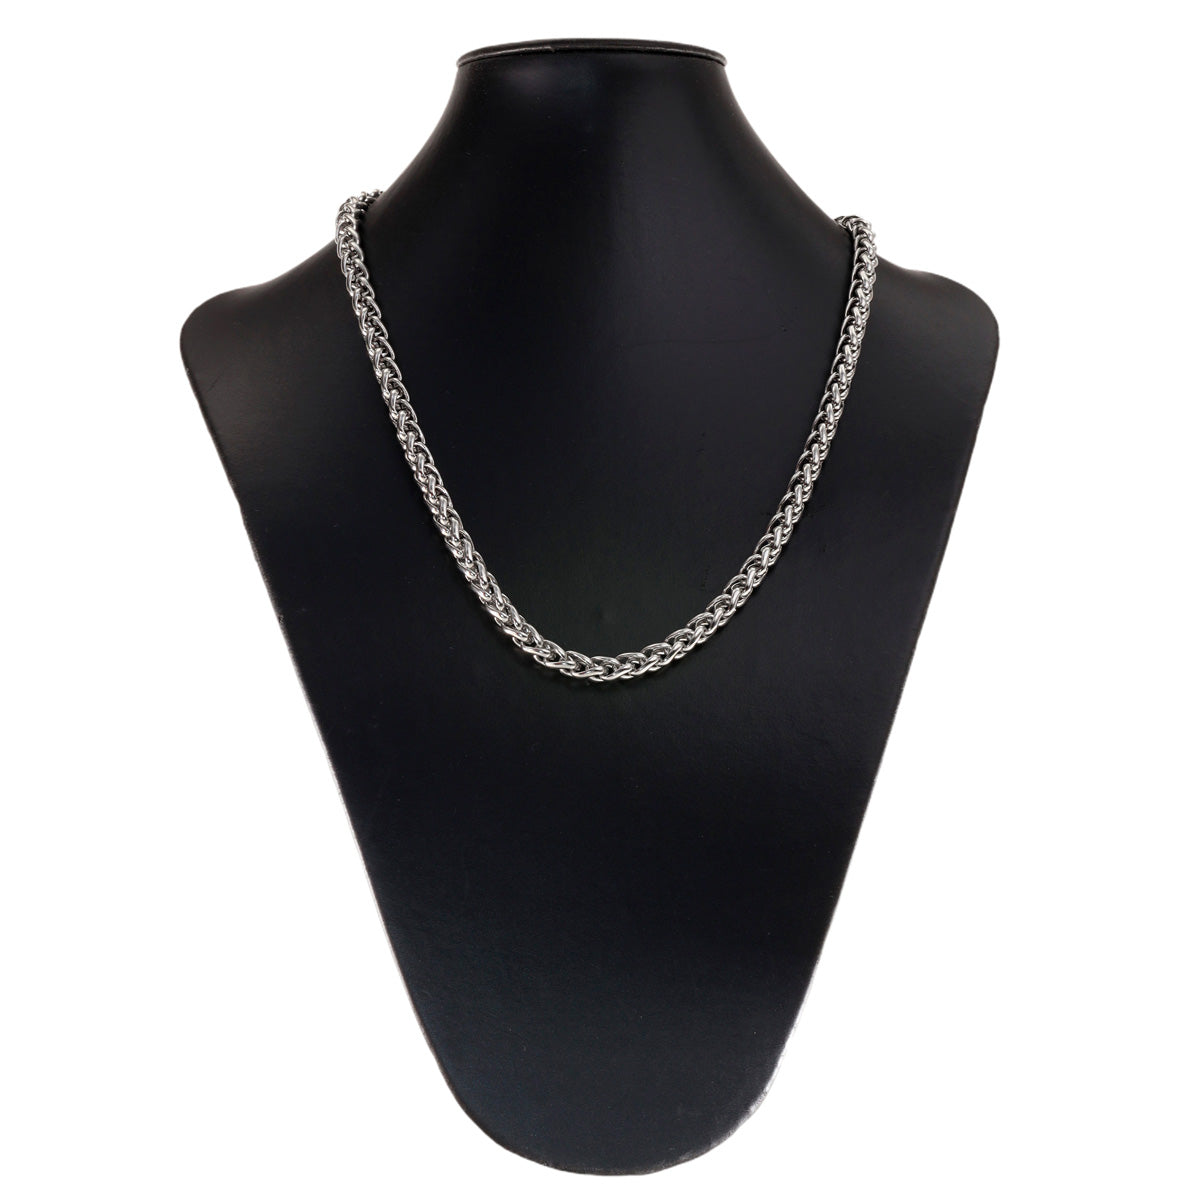 Spiga steel chain necklace 55cm